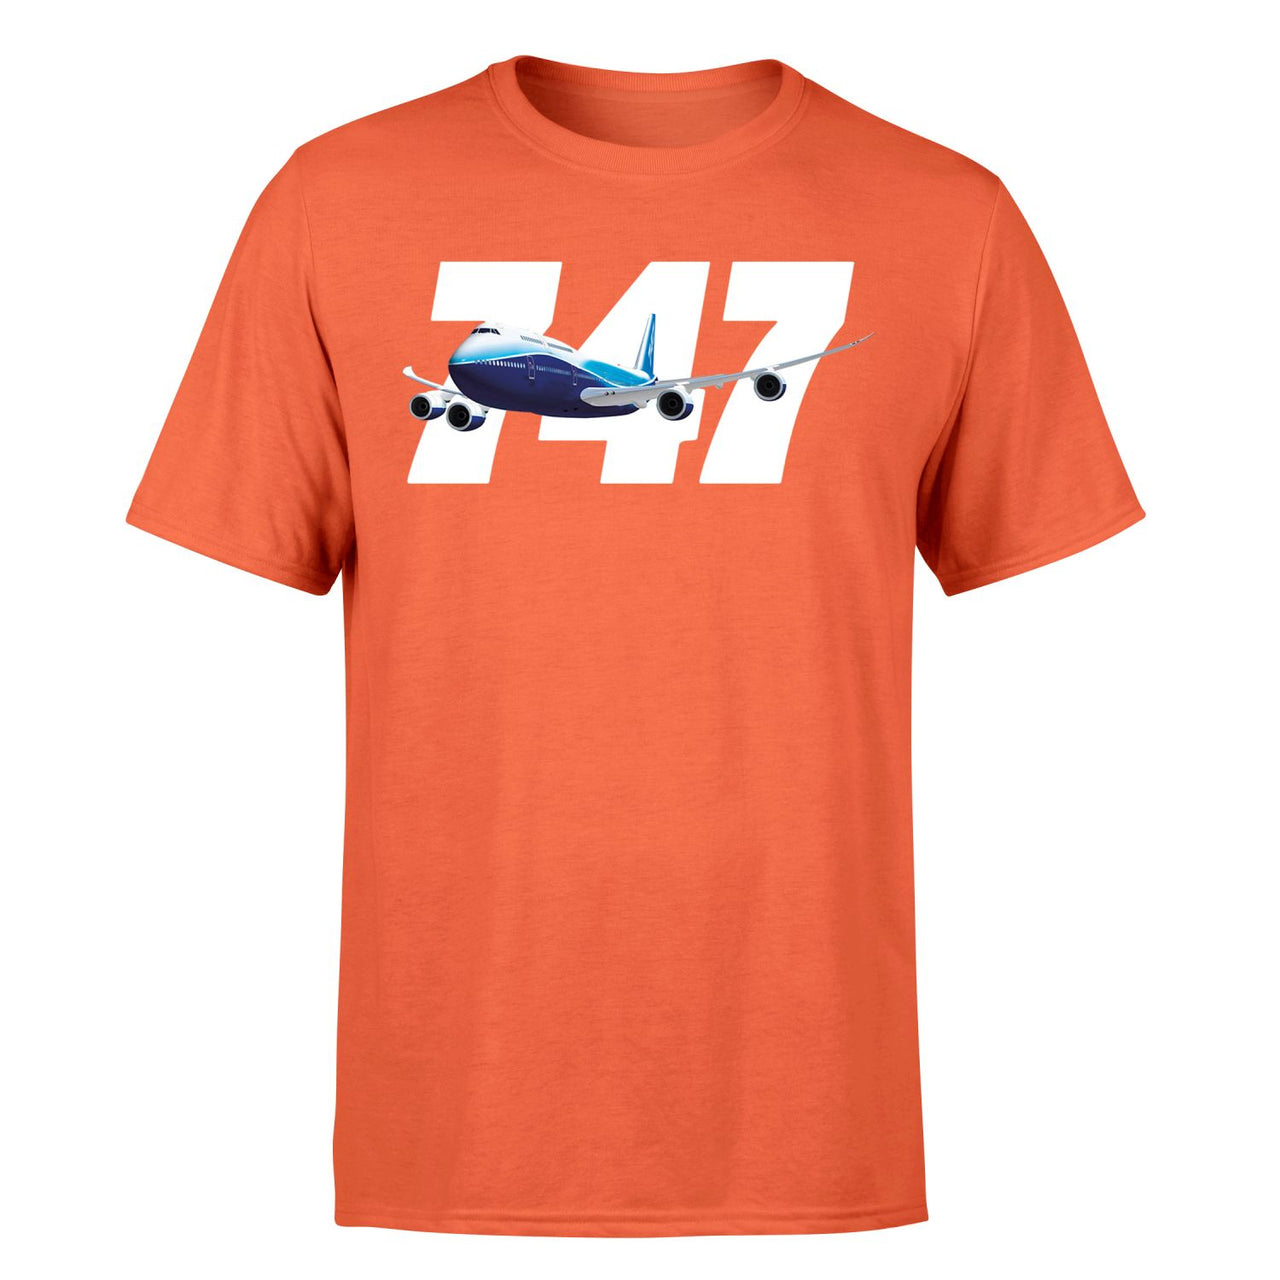 Super Boeing 747 Designed T-Shirts